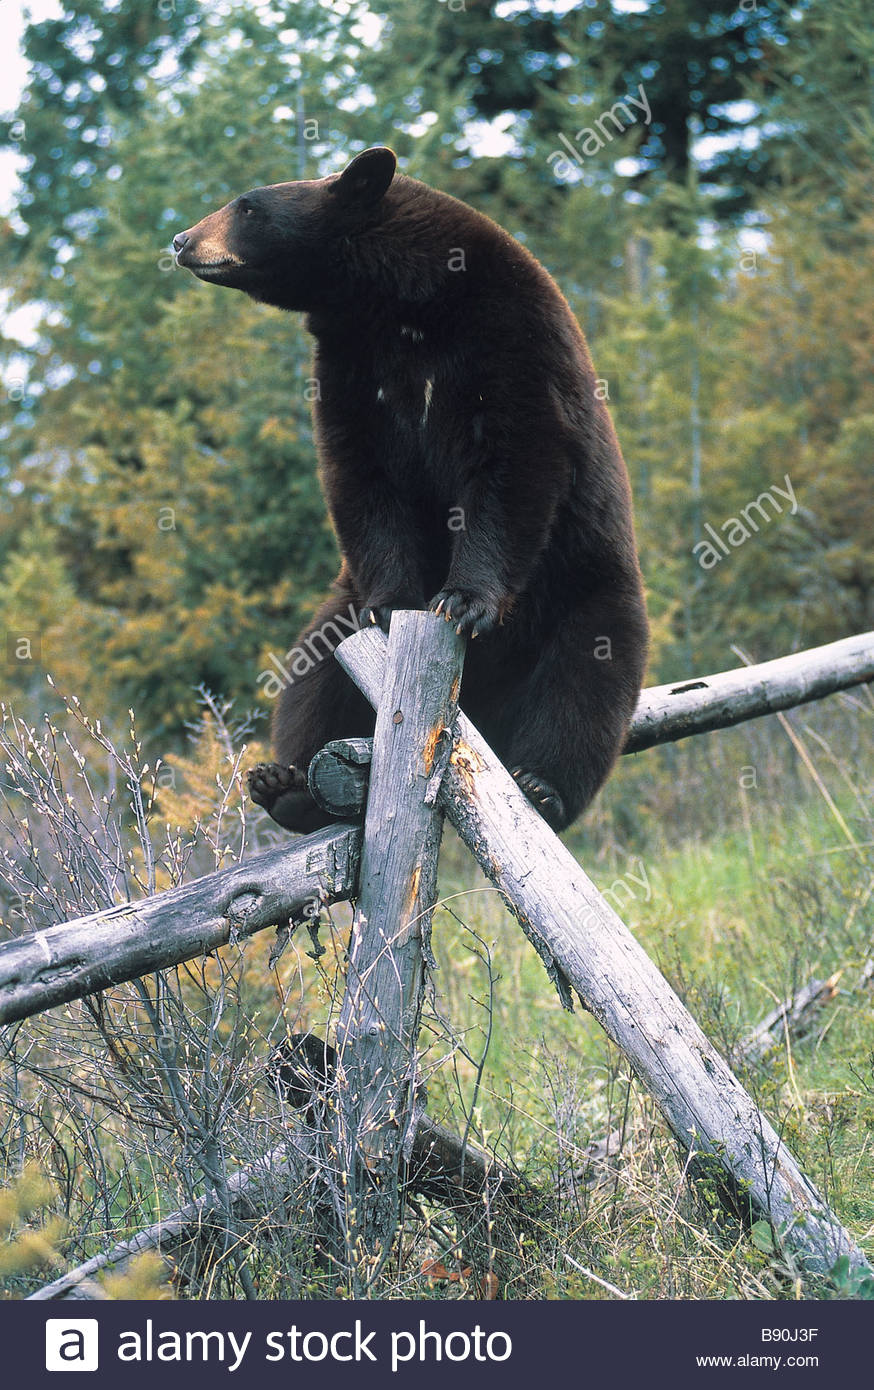 fl3136-kitchinhurst-black-bear-sitting-wood-fence-B90J3F.jpg